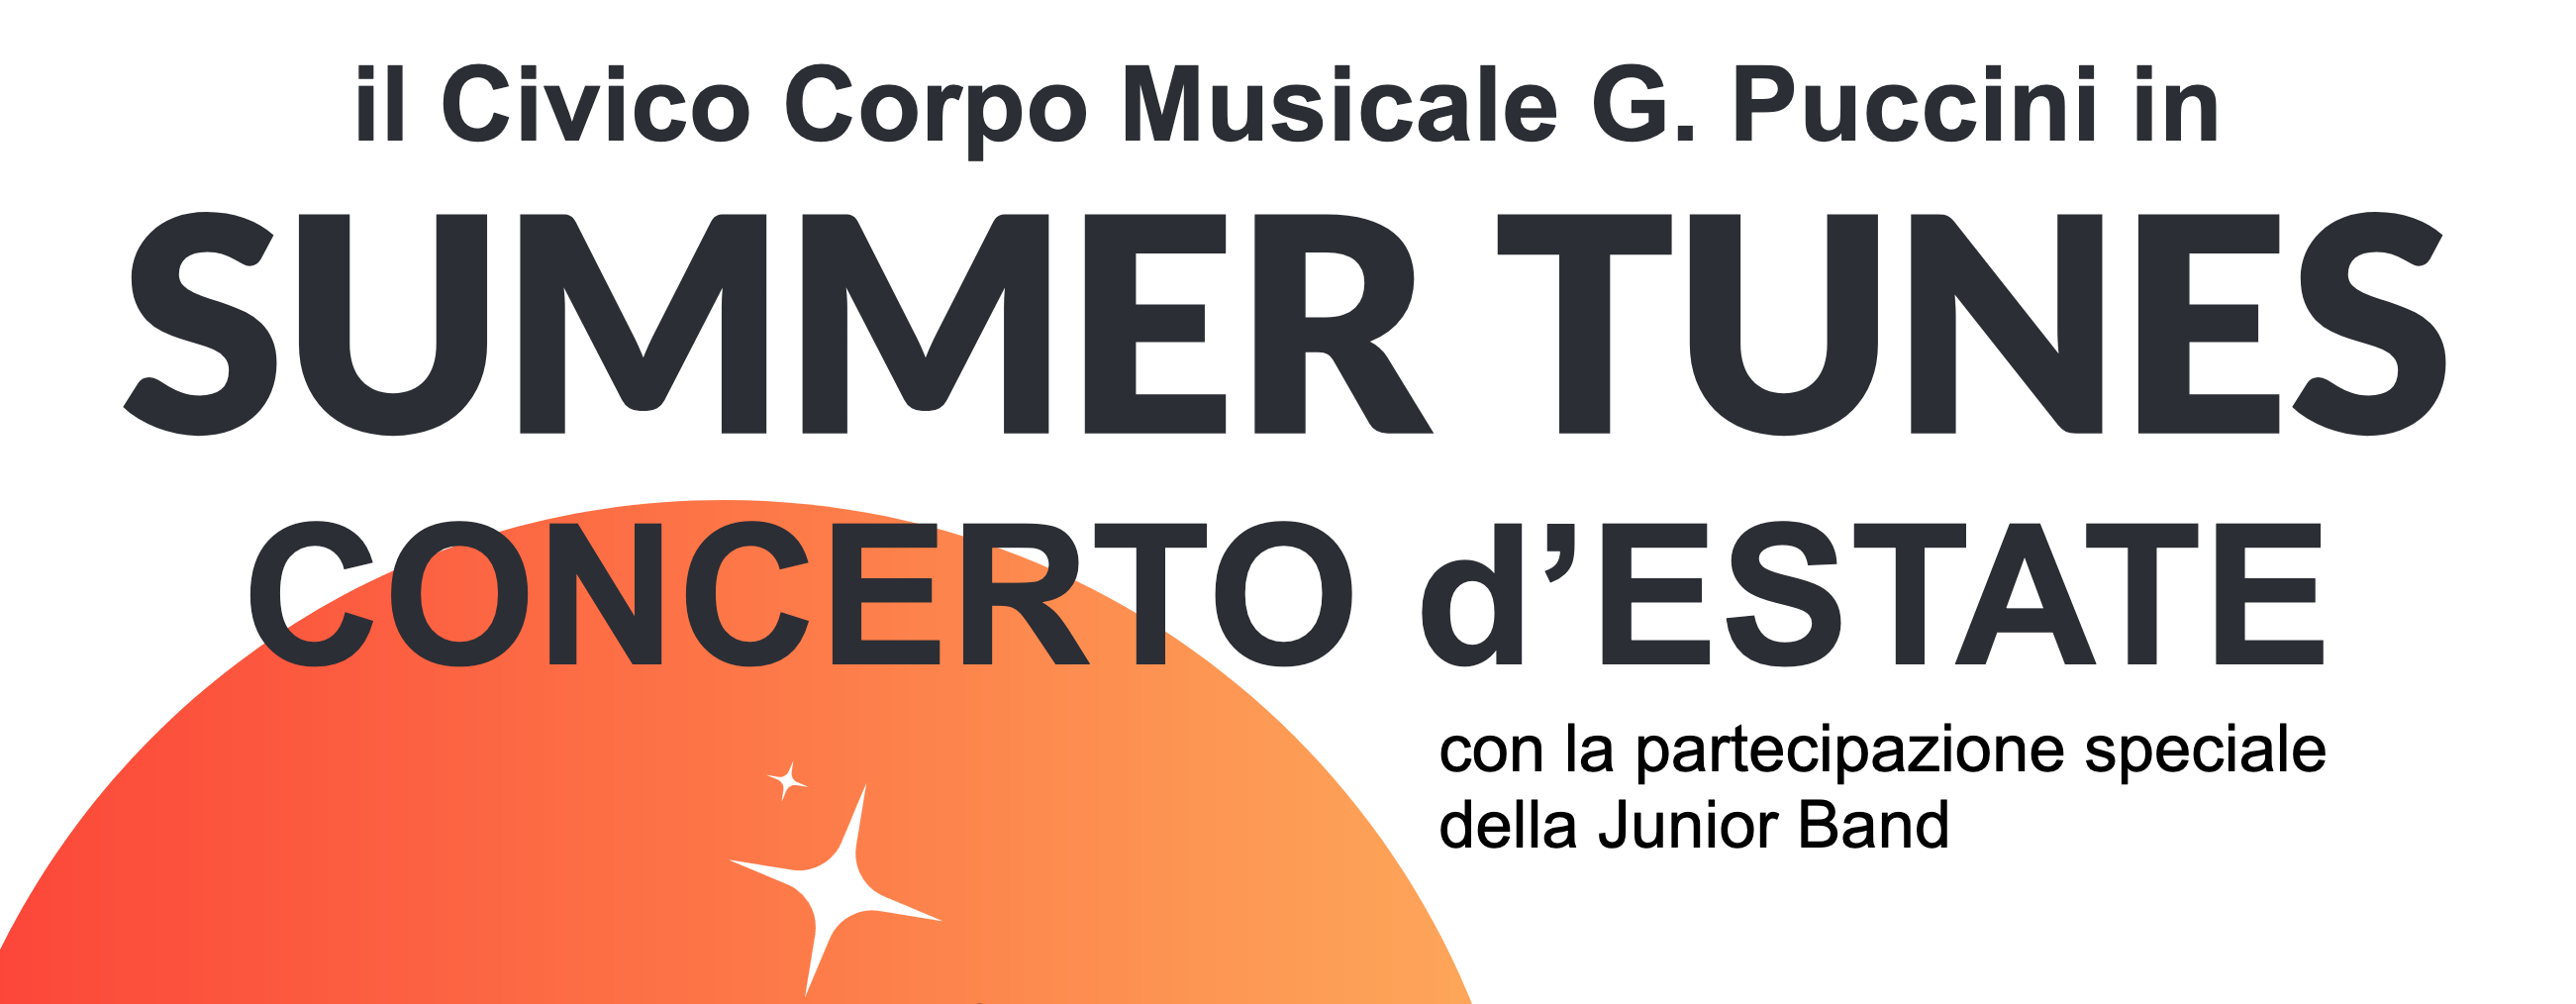 Summer tunes – Concerto d′estate